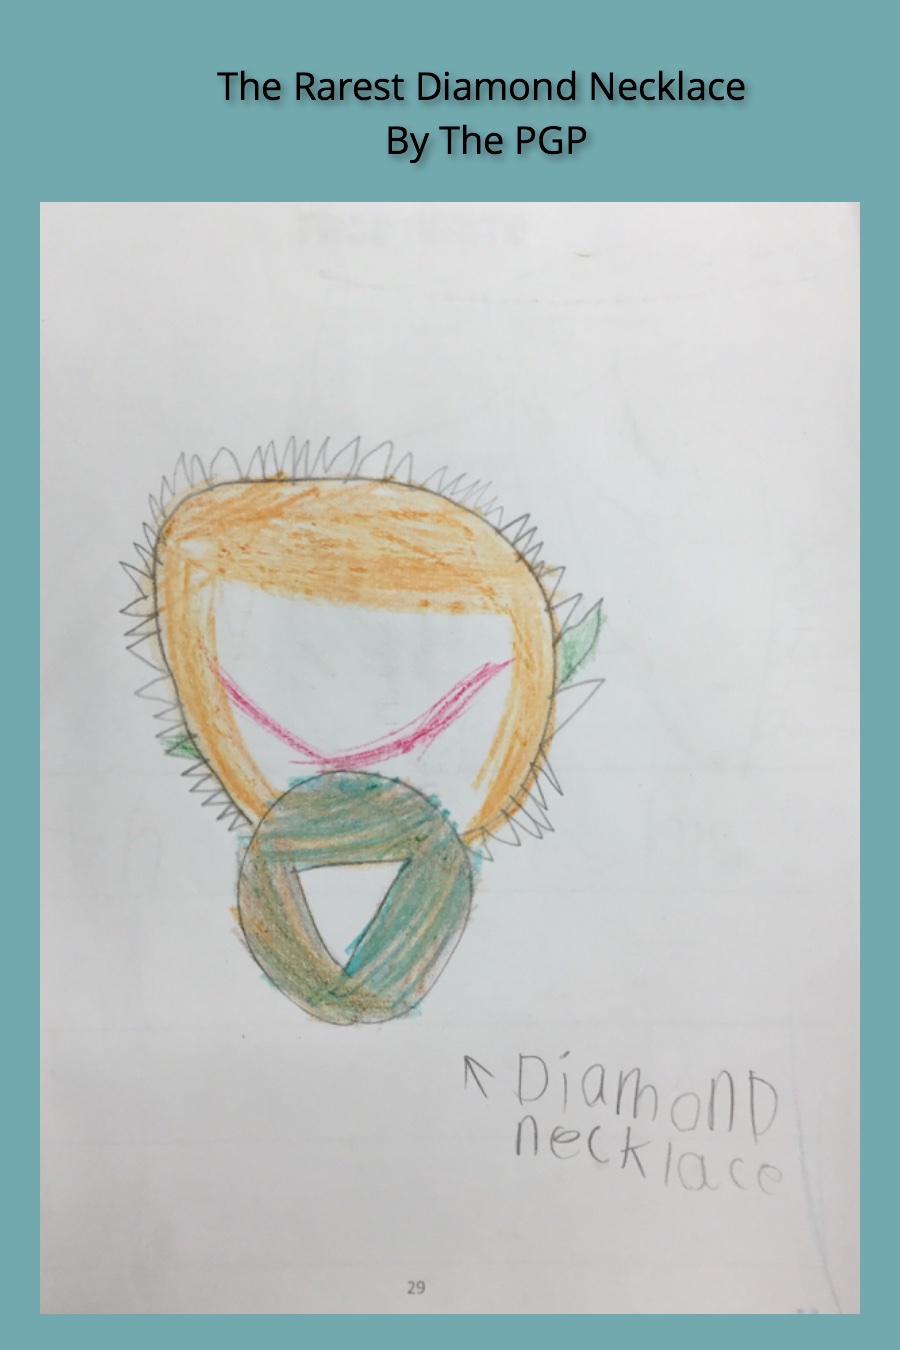 The Rarest Diamond Necklace by Danville-July 8-1st grade